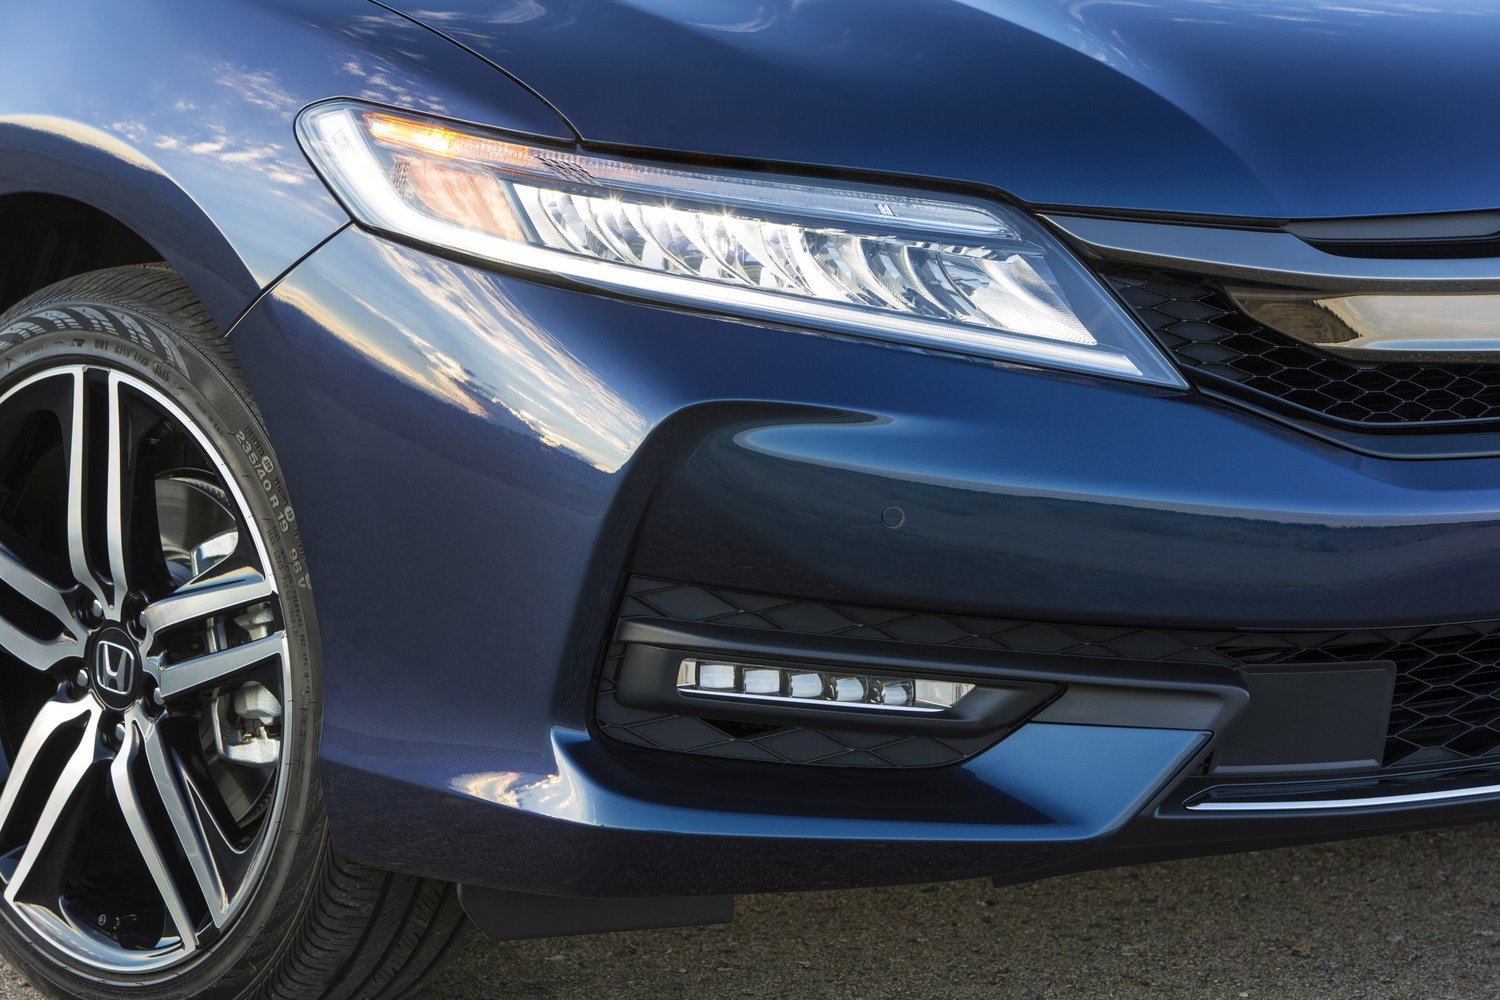 купе Honda Accord 2015 - 2016г выпуска модификация 2.4 CVT (185 л.с.)